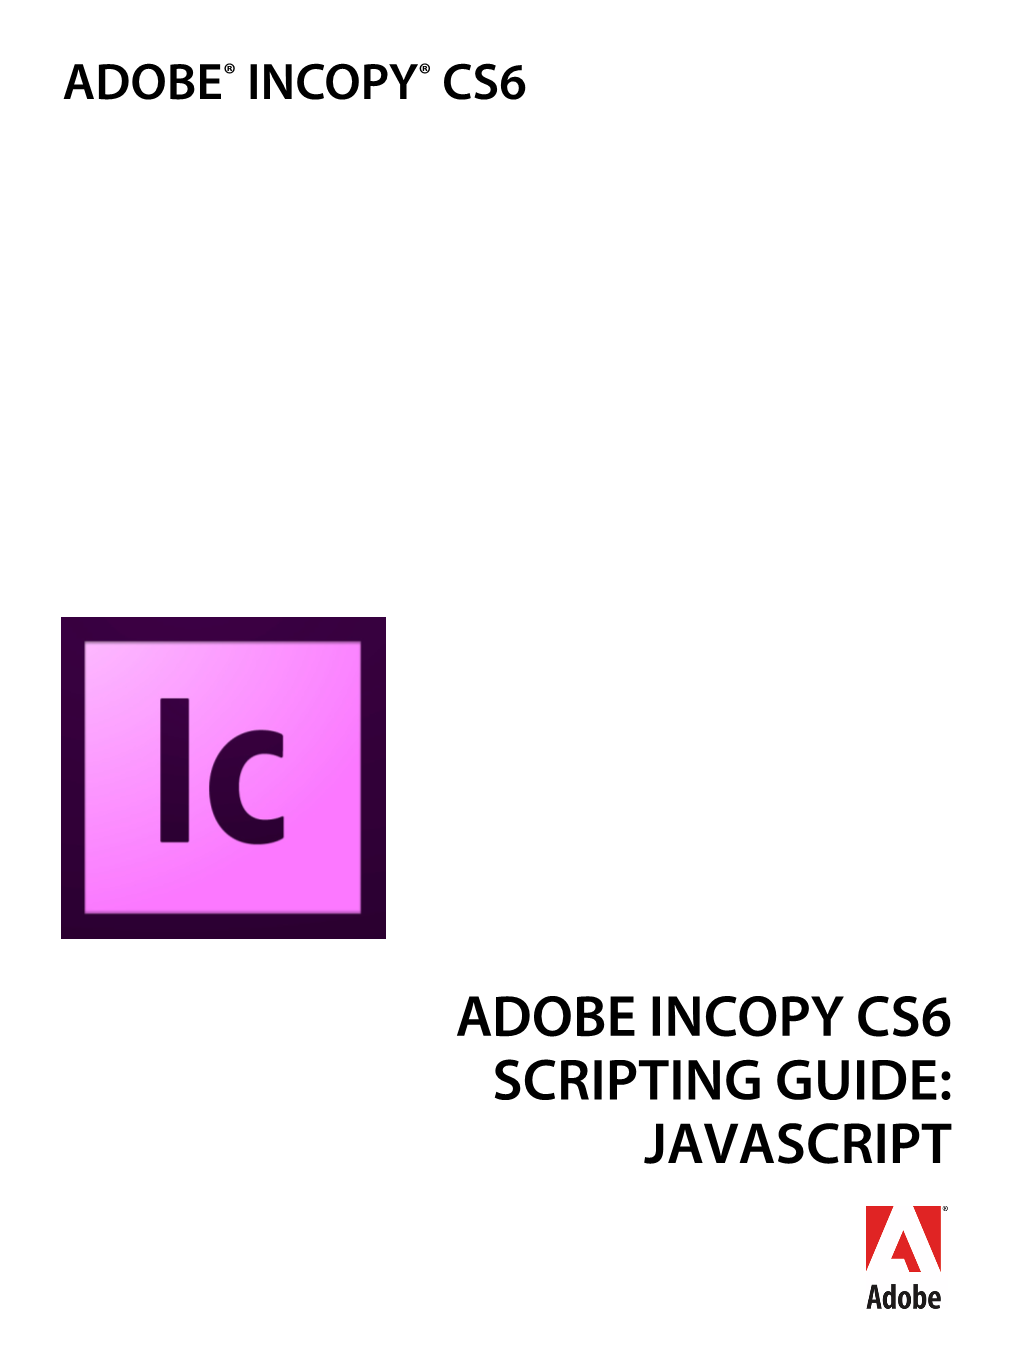 Adobe Incopy CS6 Javascript Scripting Guide